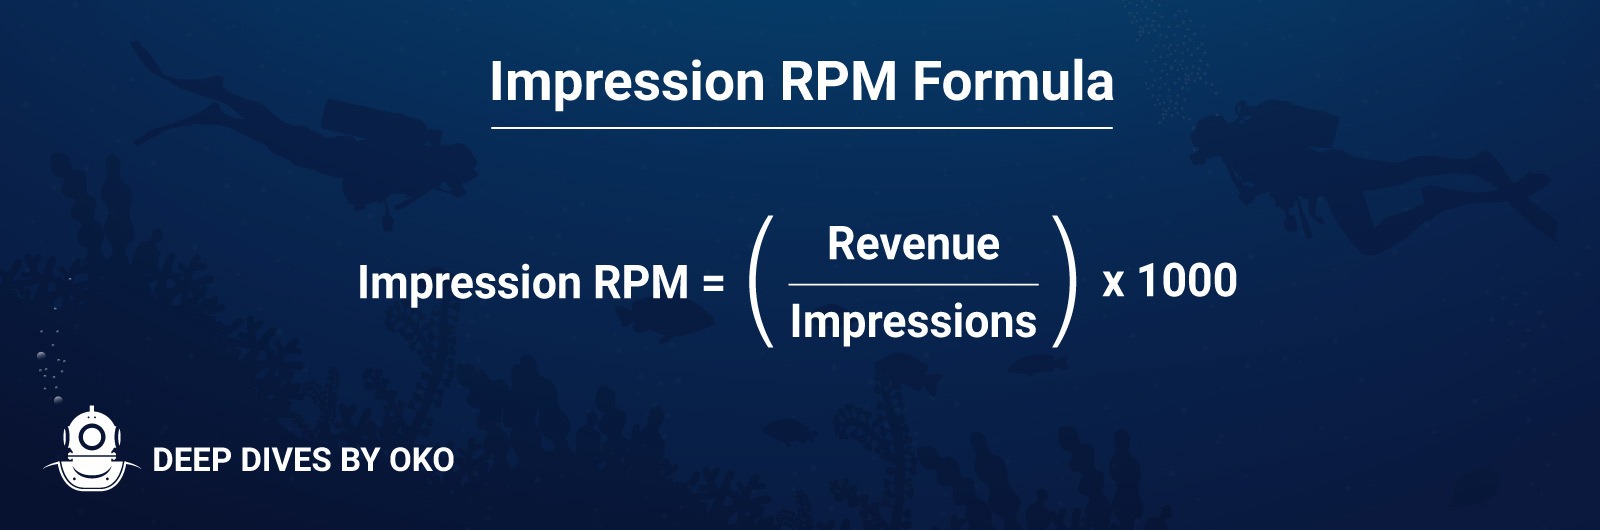 Impression RPM Formula